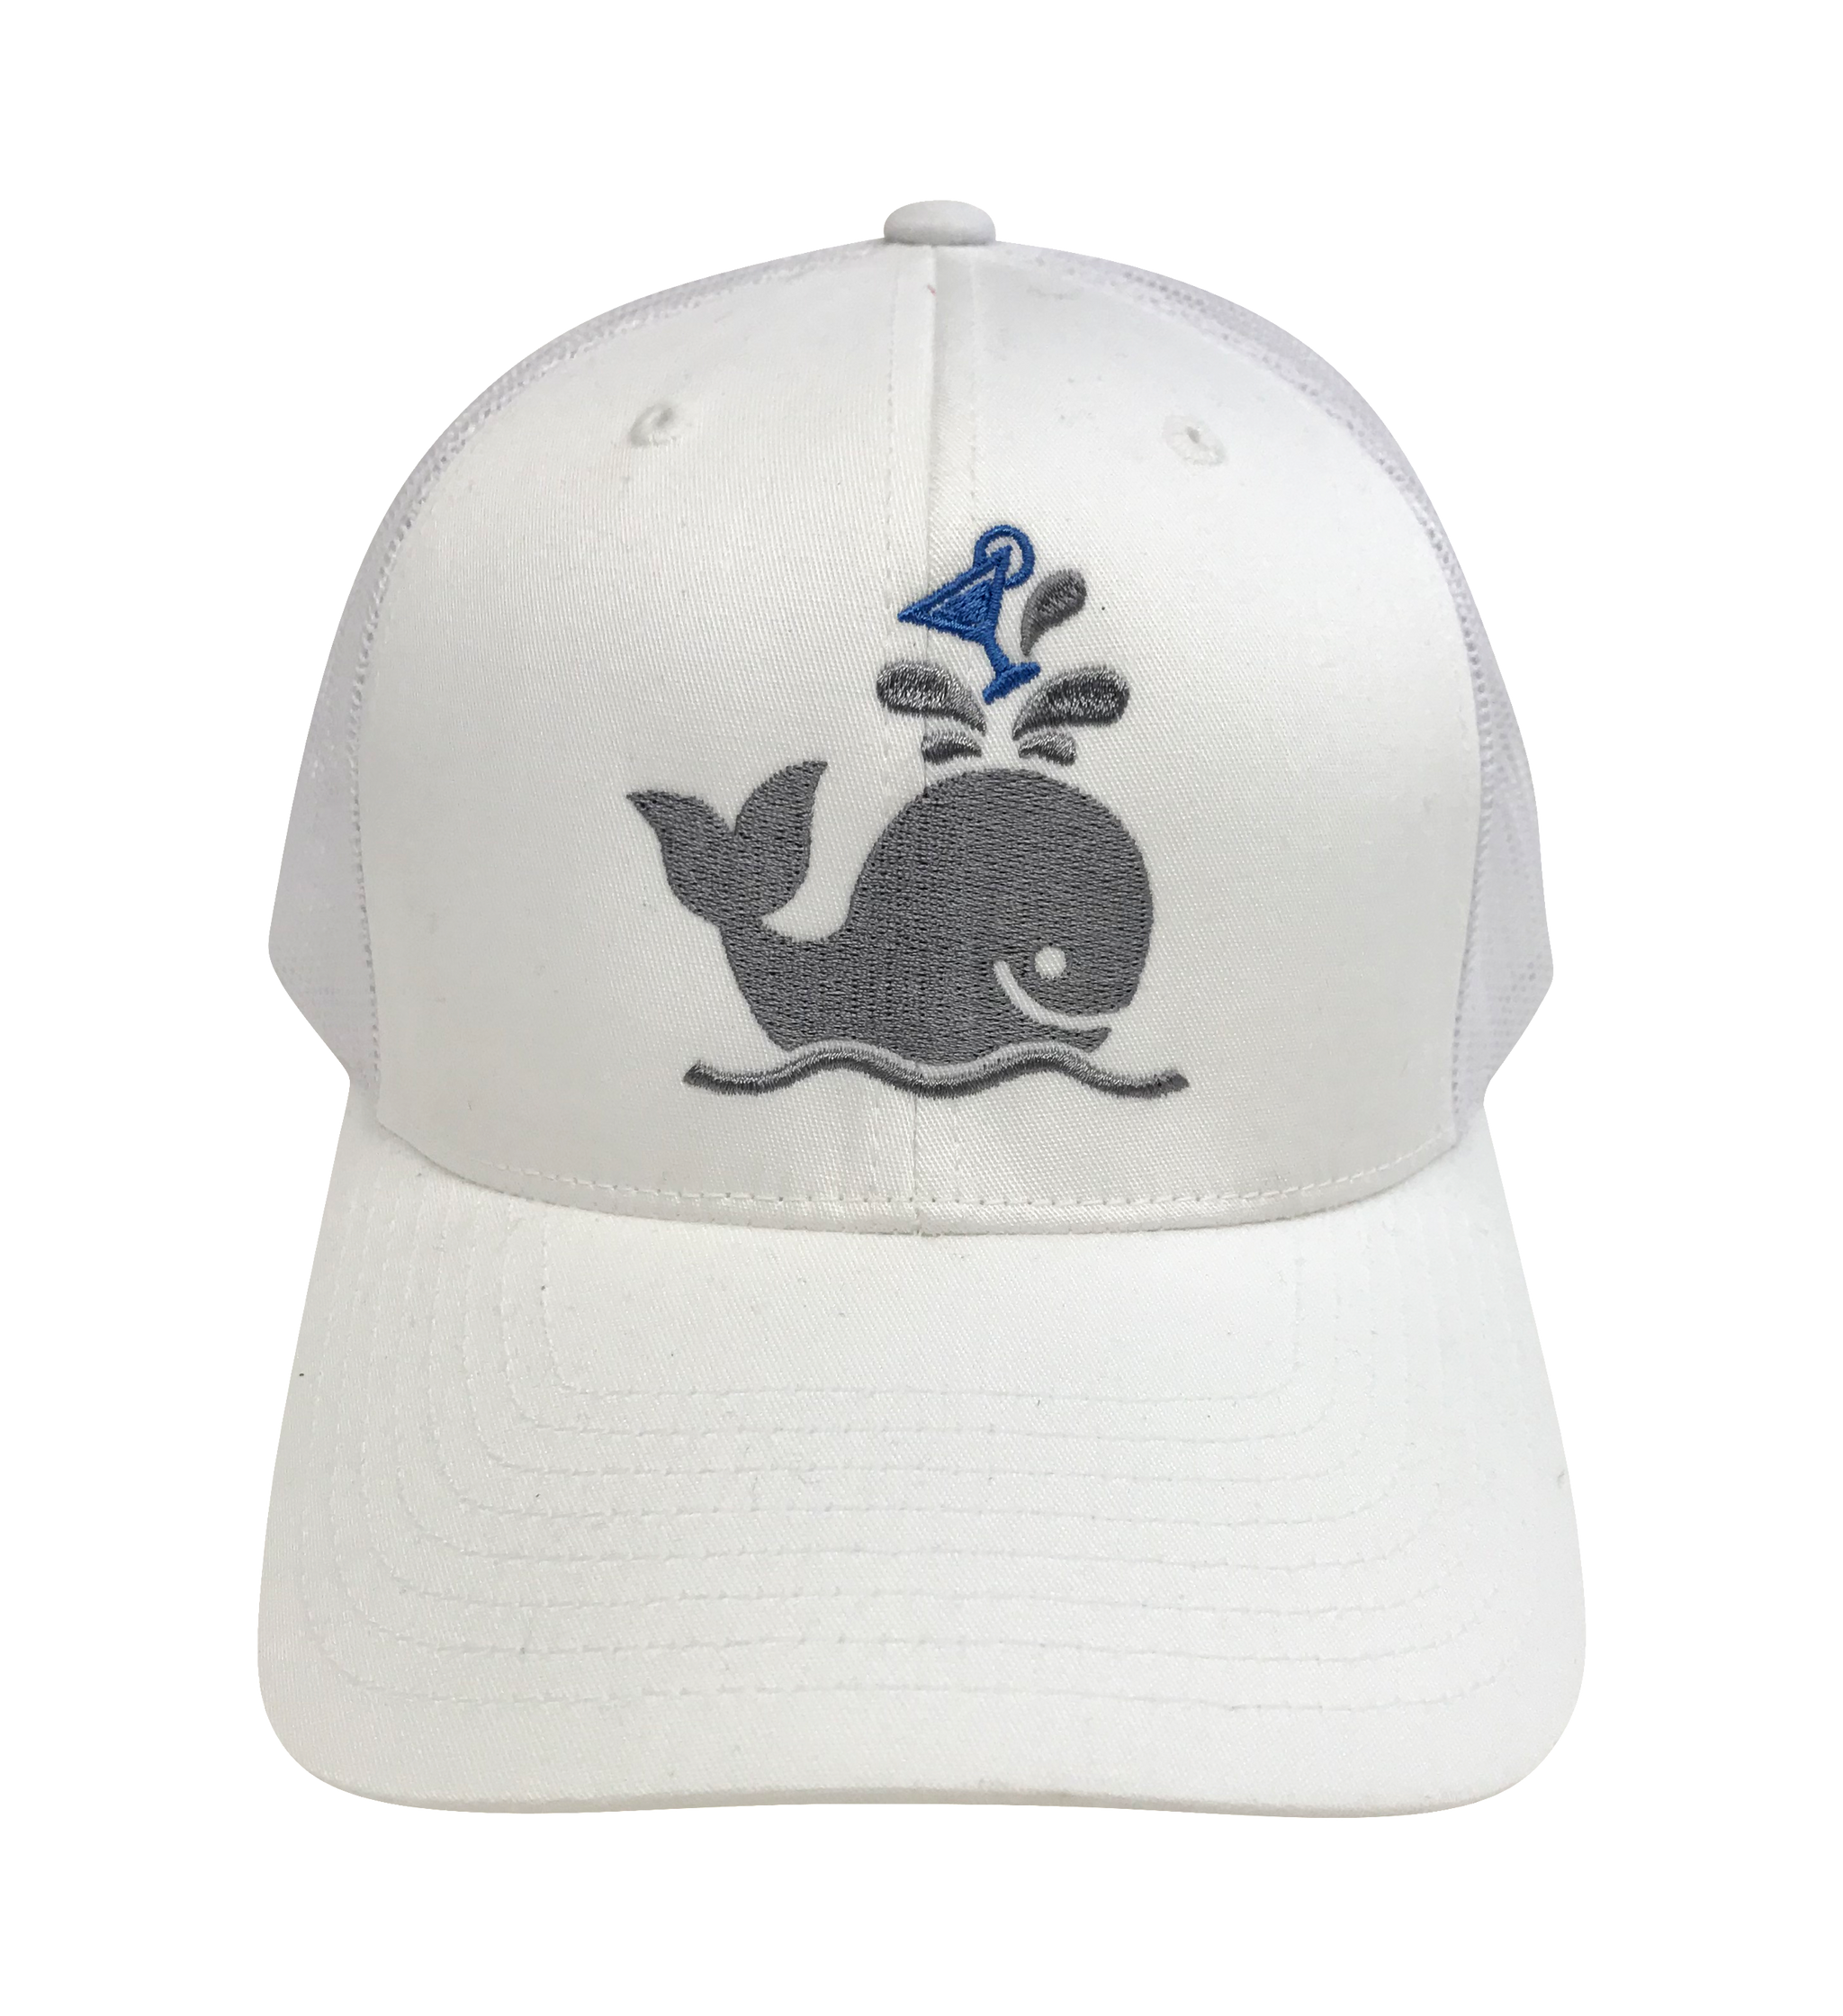 Island Smilin' Spout the Martini Whale Embroidered Trucker Hat - White